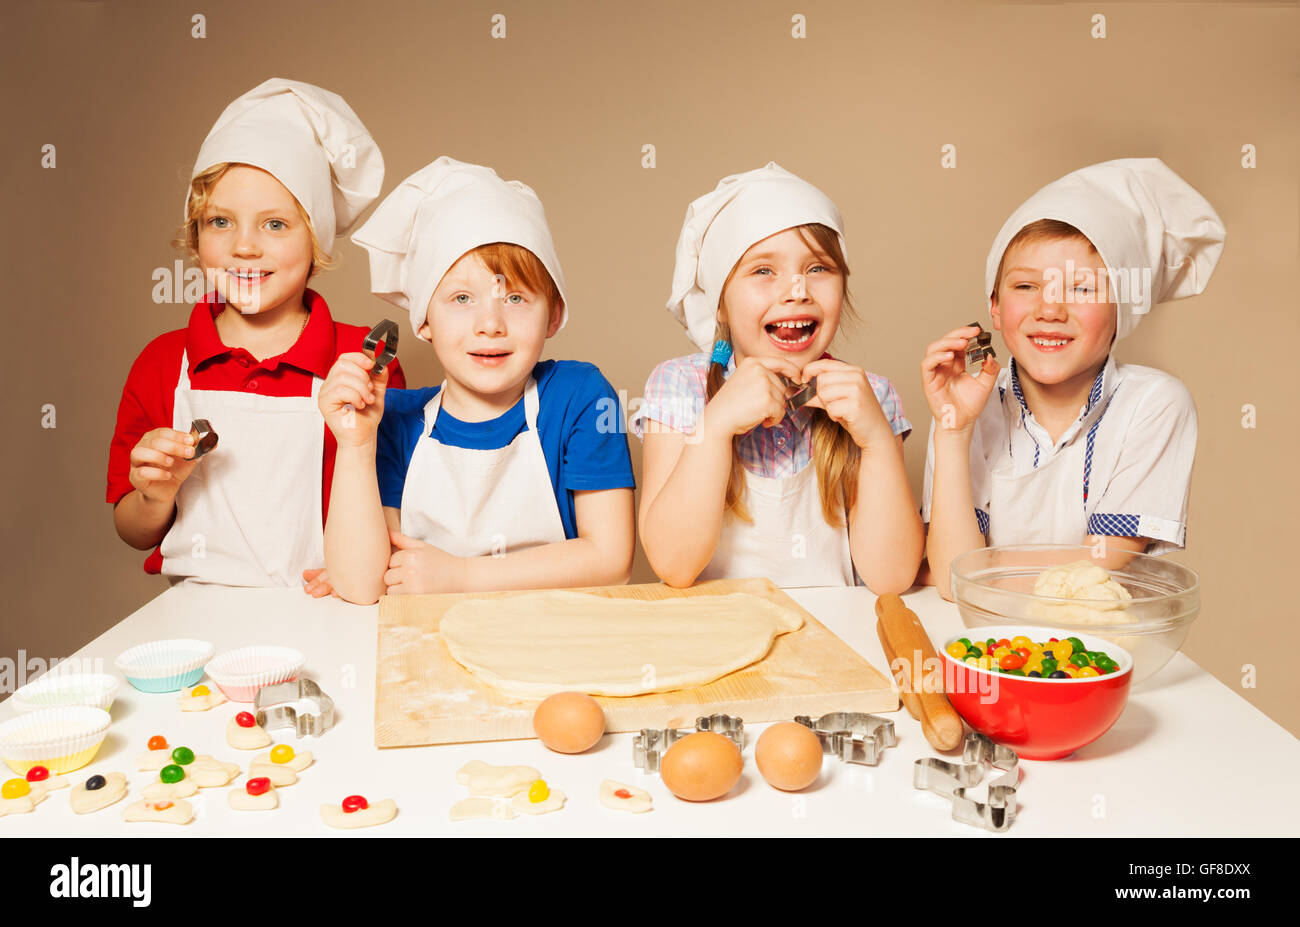 https://c8.alamy.com/comp/GF8DXX/four-happy-little-chefs-playing-bakers-GF8DXX.jpg